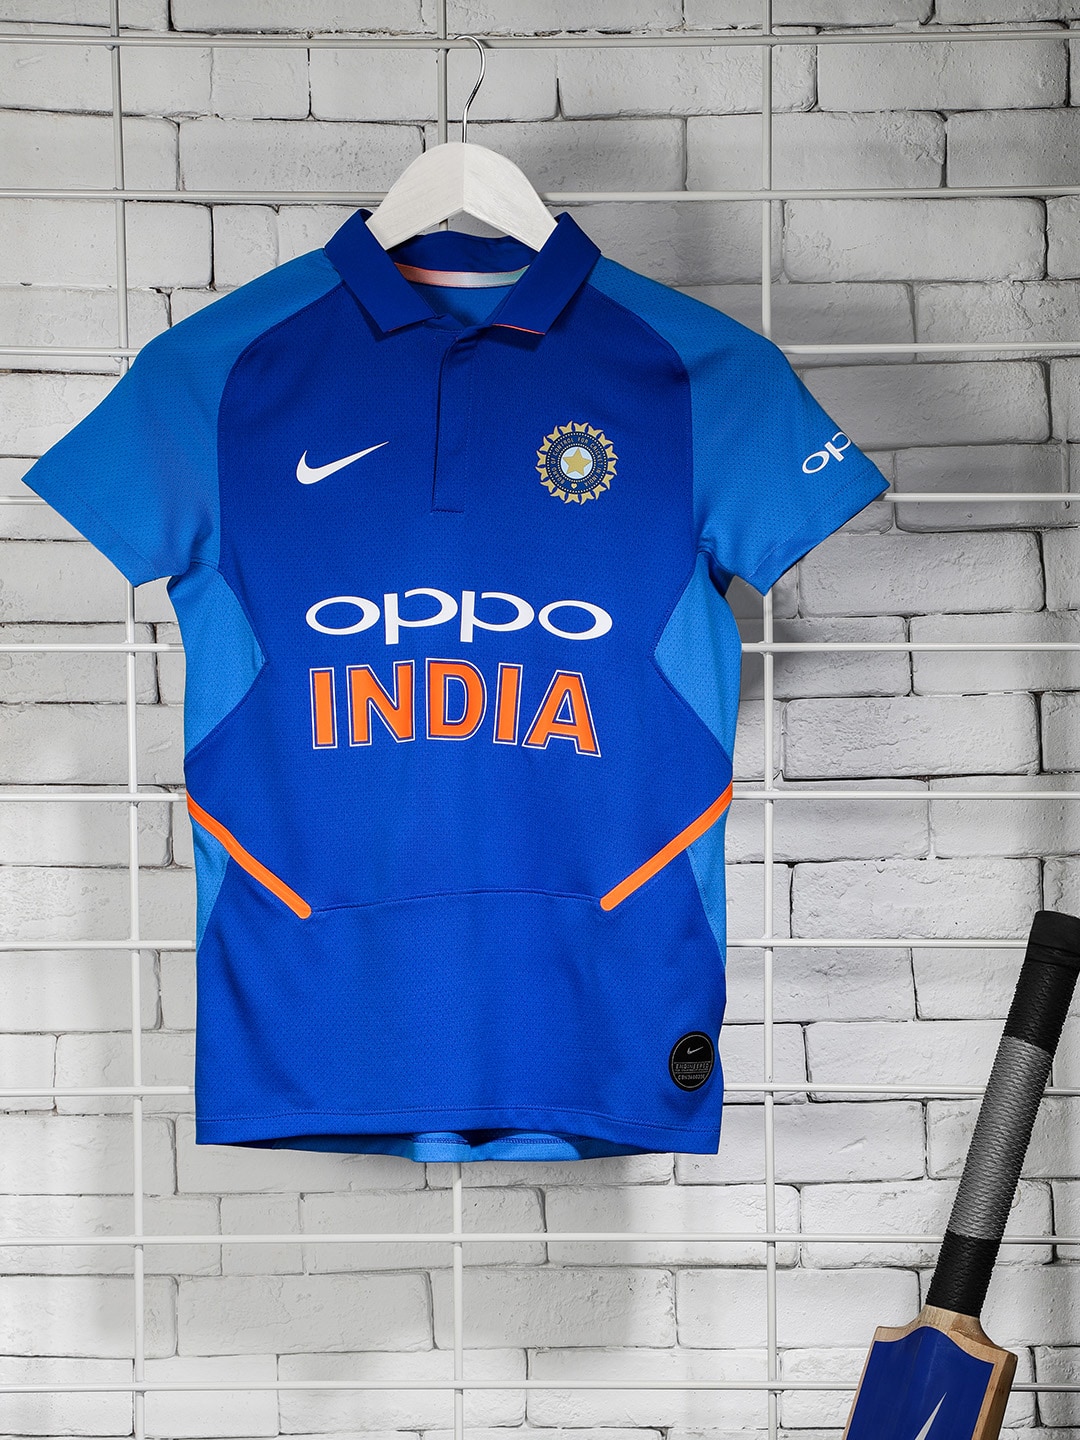 buy indian cricket jersey 2019